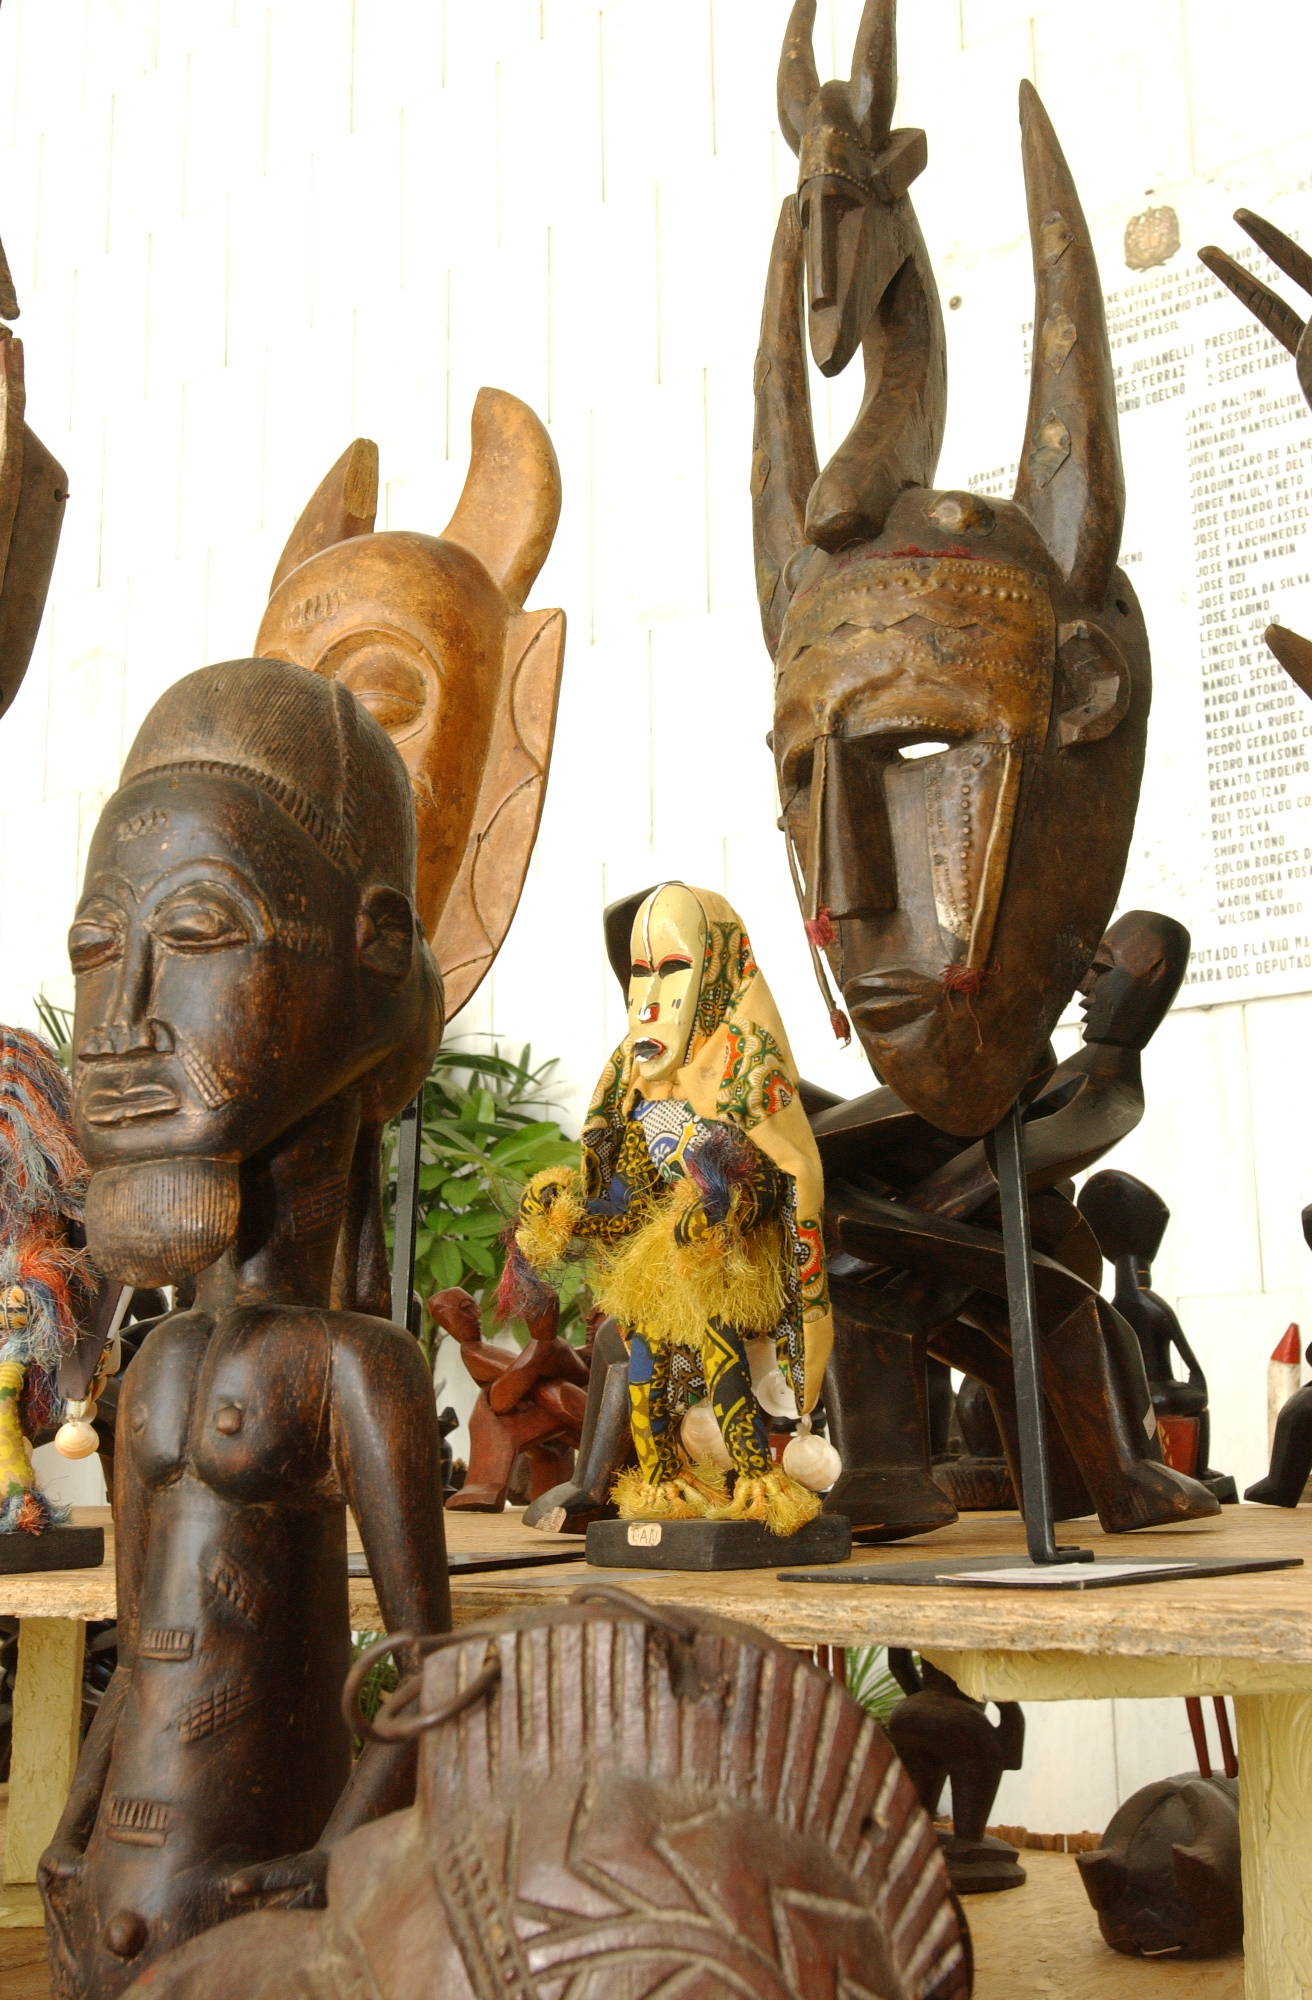 Esculturas, mscaras e estatuetas africanas<a style='float:right;color:#ccc' href='https://www3.al.sp.gov.br/repositorio/noticia/hist/Exposicao cultura negra.jpg' target=_blank><i class='bi bi-zoom-in'></i> Clique para ver a imagem </a>